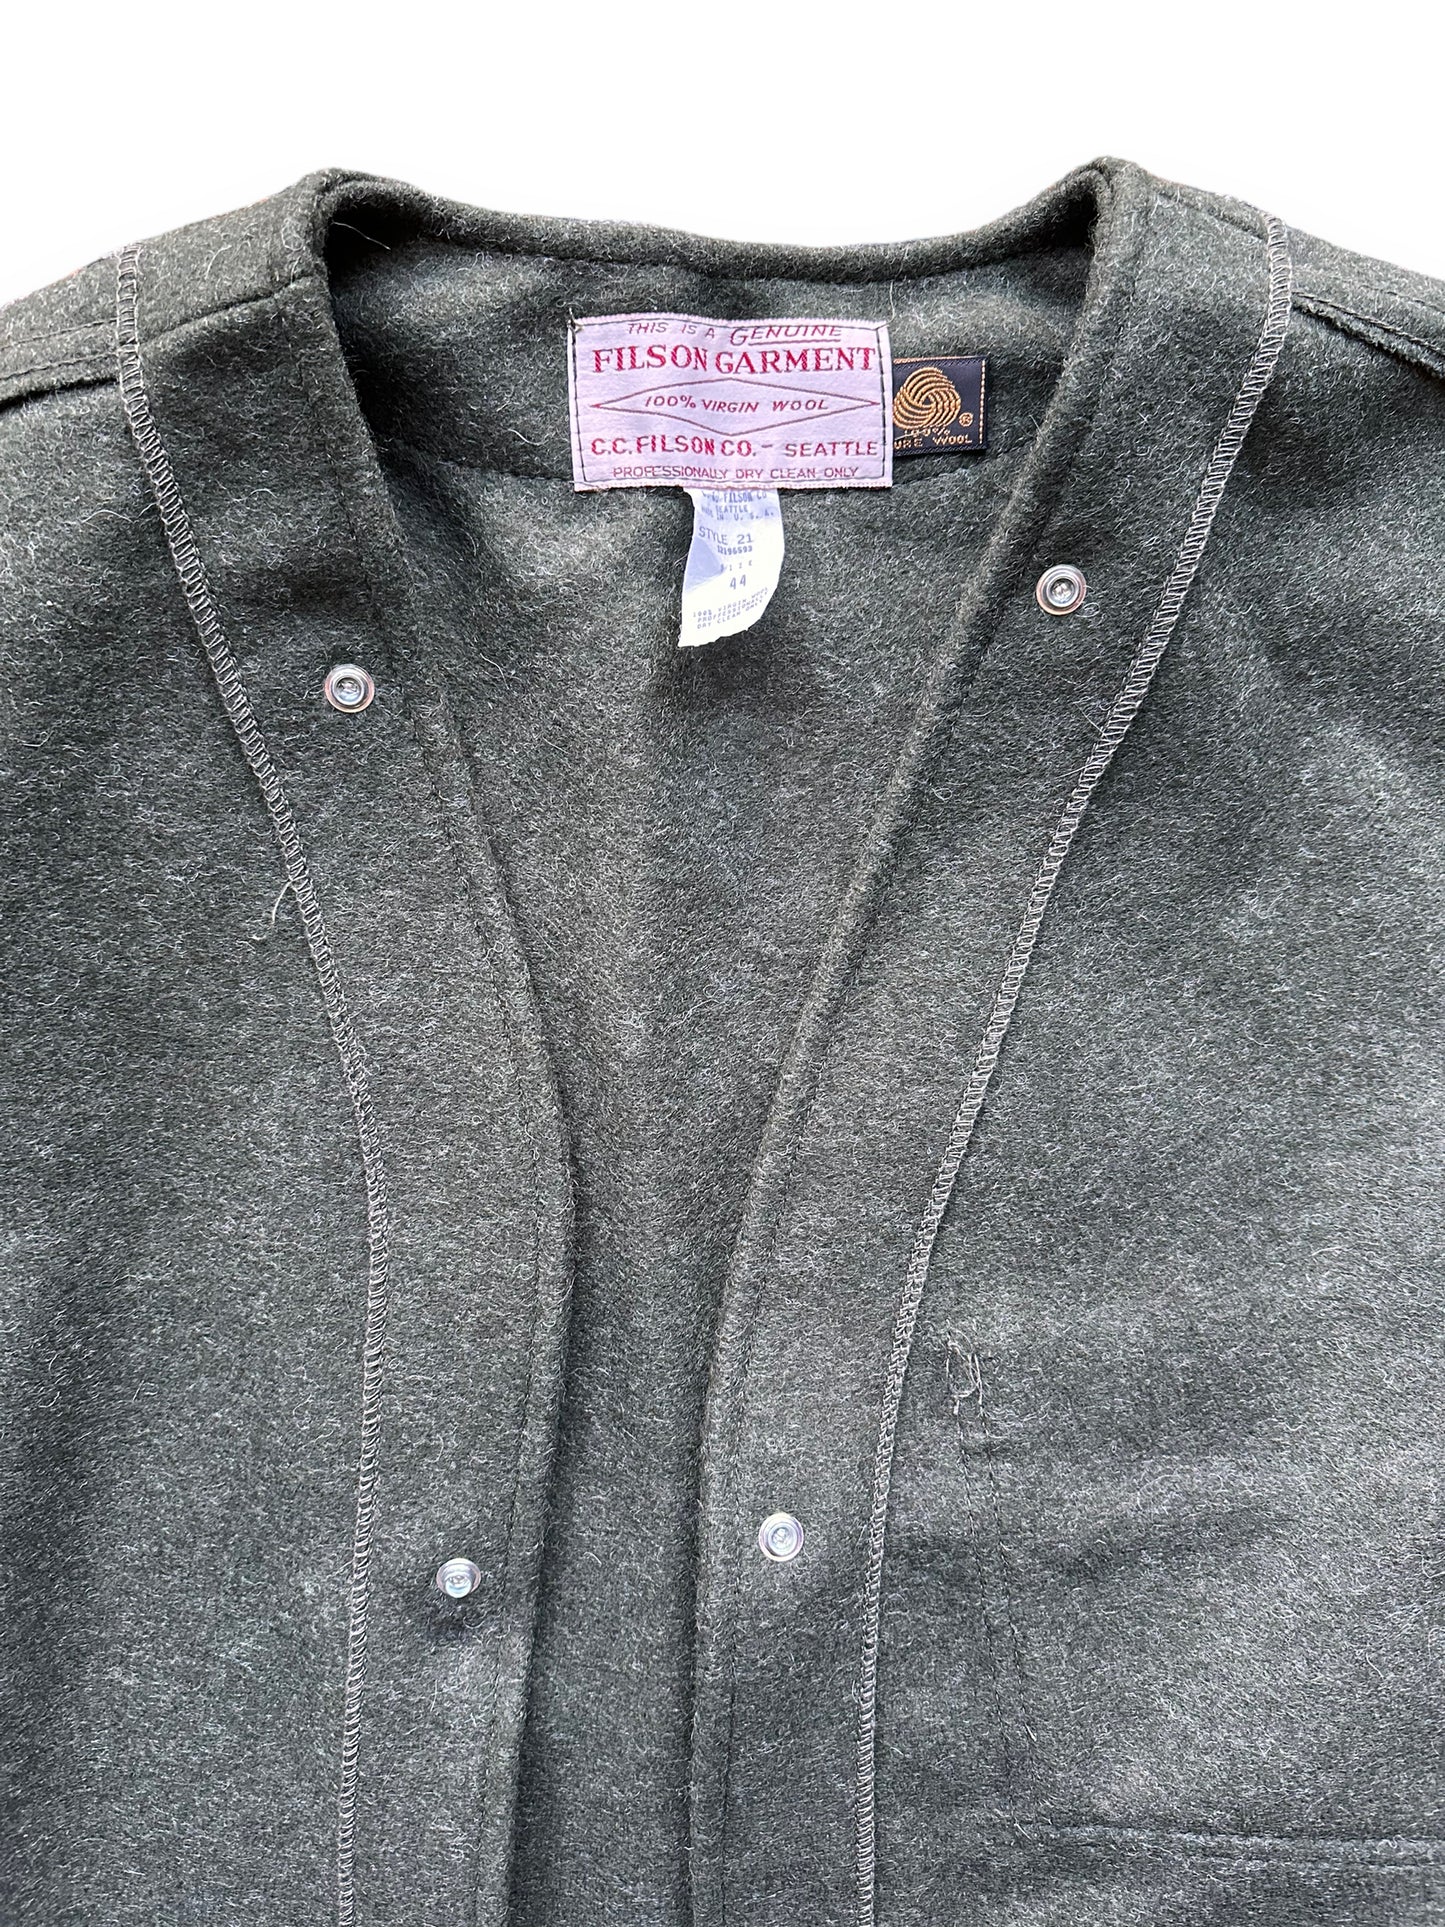 Tag View on Vintage Deadstock Filson Mackinaw Wool Liner SZ L |  Vintage Filson Workwear Seattle | Barn Owl Vintage